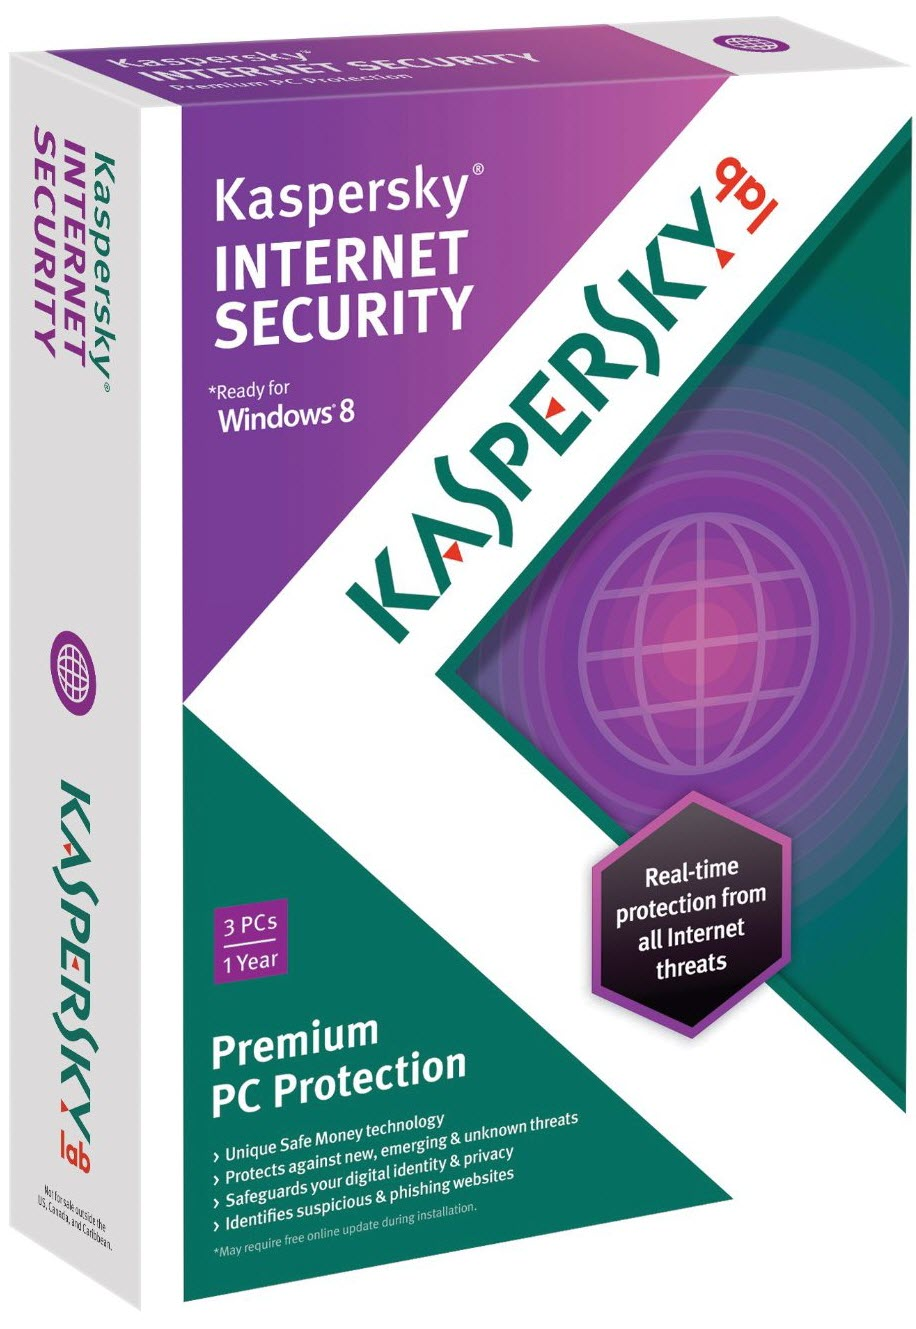 Kaspersky Internet Security 2013 v13.0.1.4190 Final Incl Keymaker